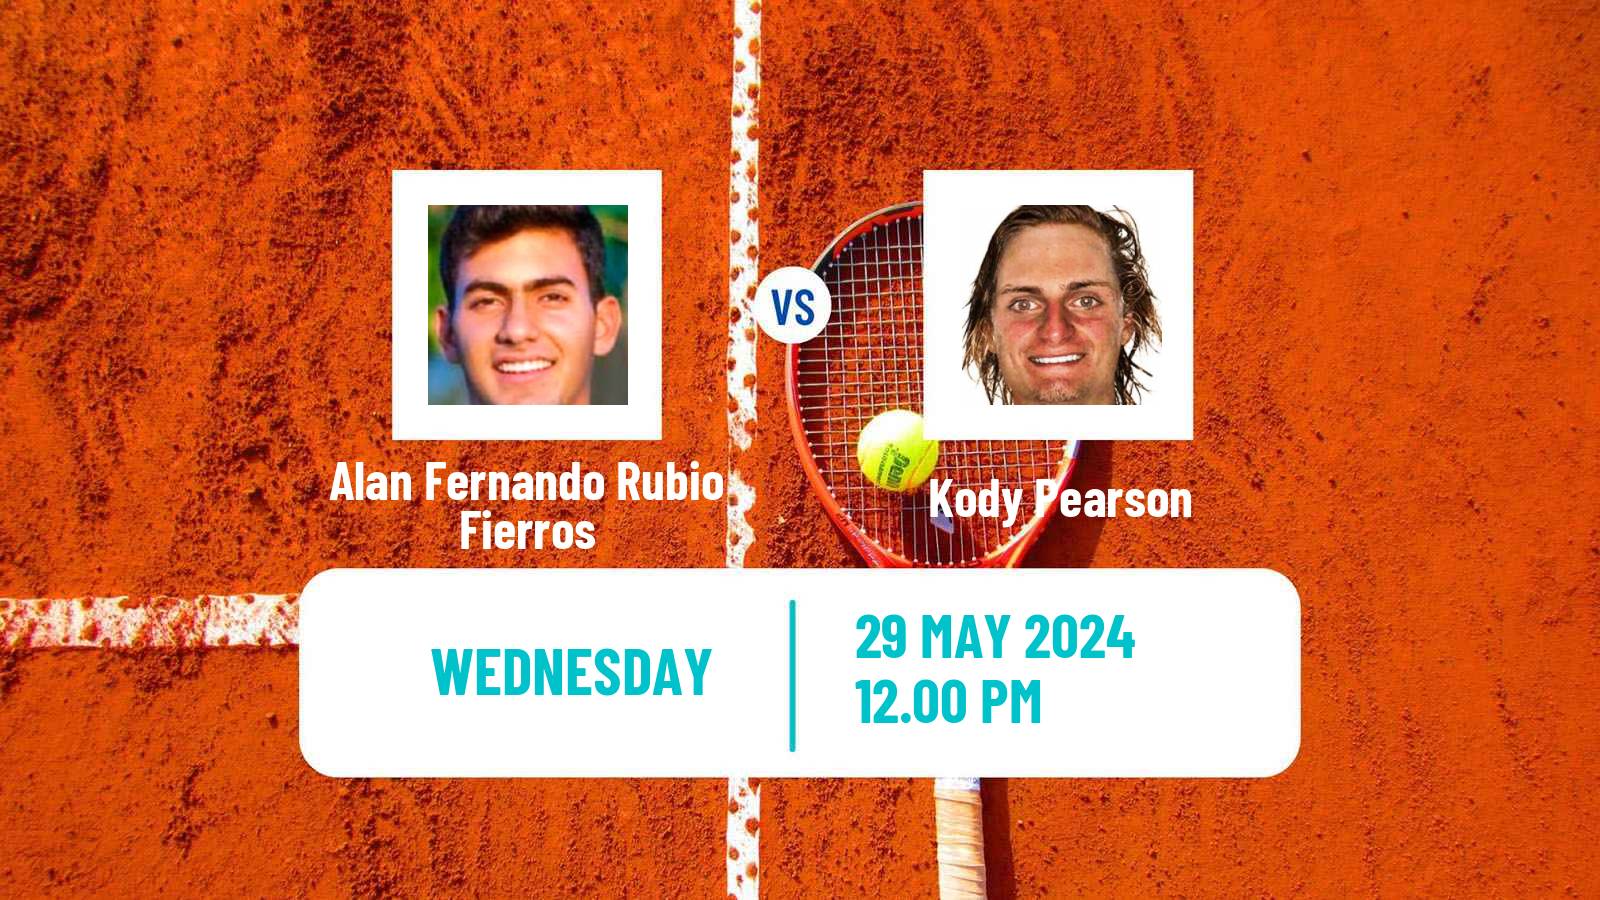 Tennis ITF M15 San Diego Ca Men Alan Fernando Rubio Fierros - Kody Pearson